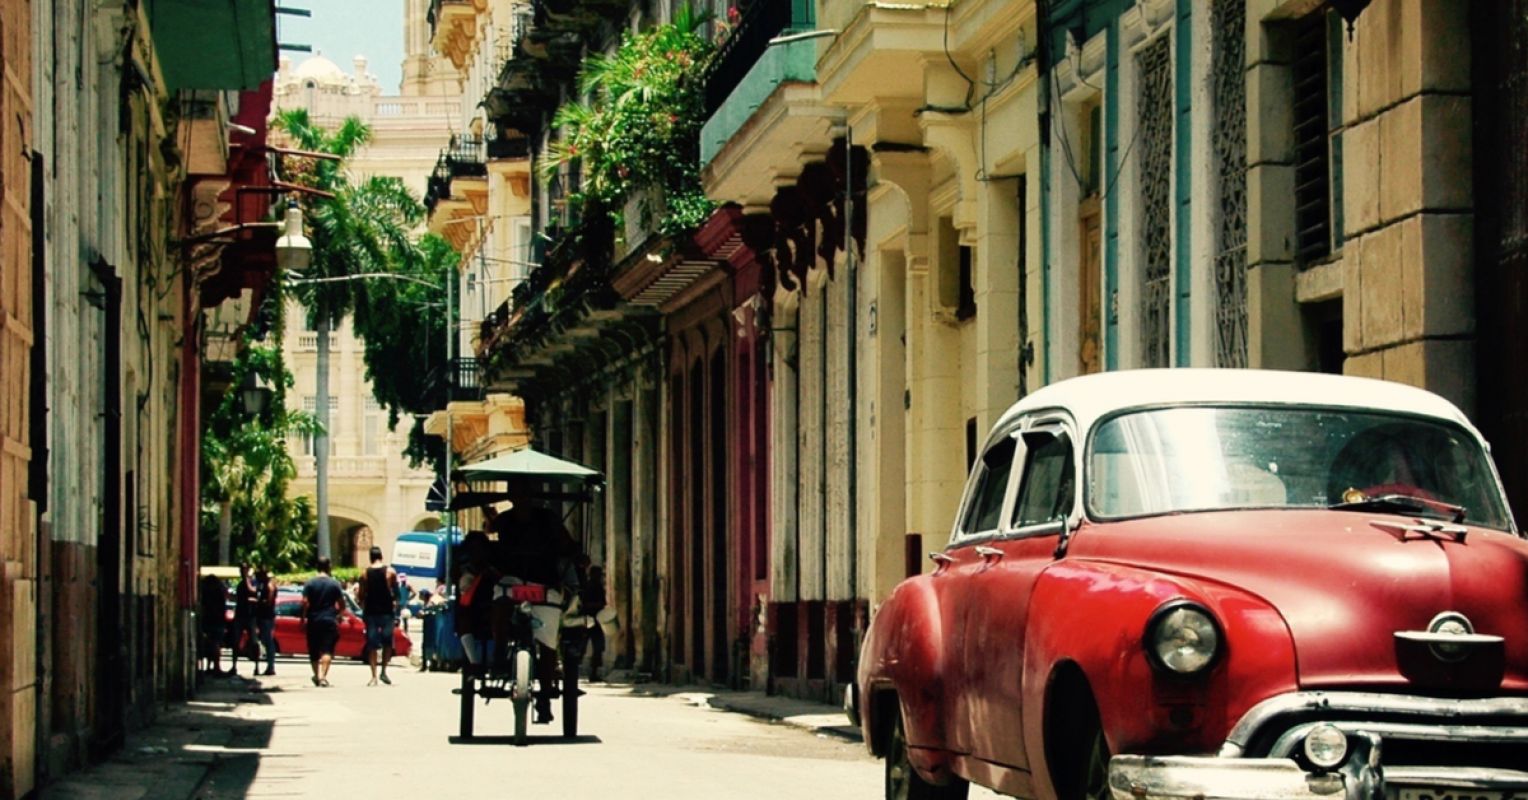 Need sex on the in Havana